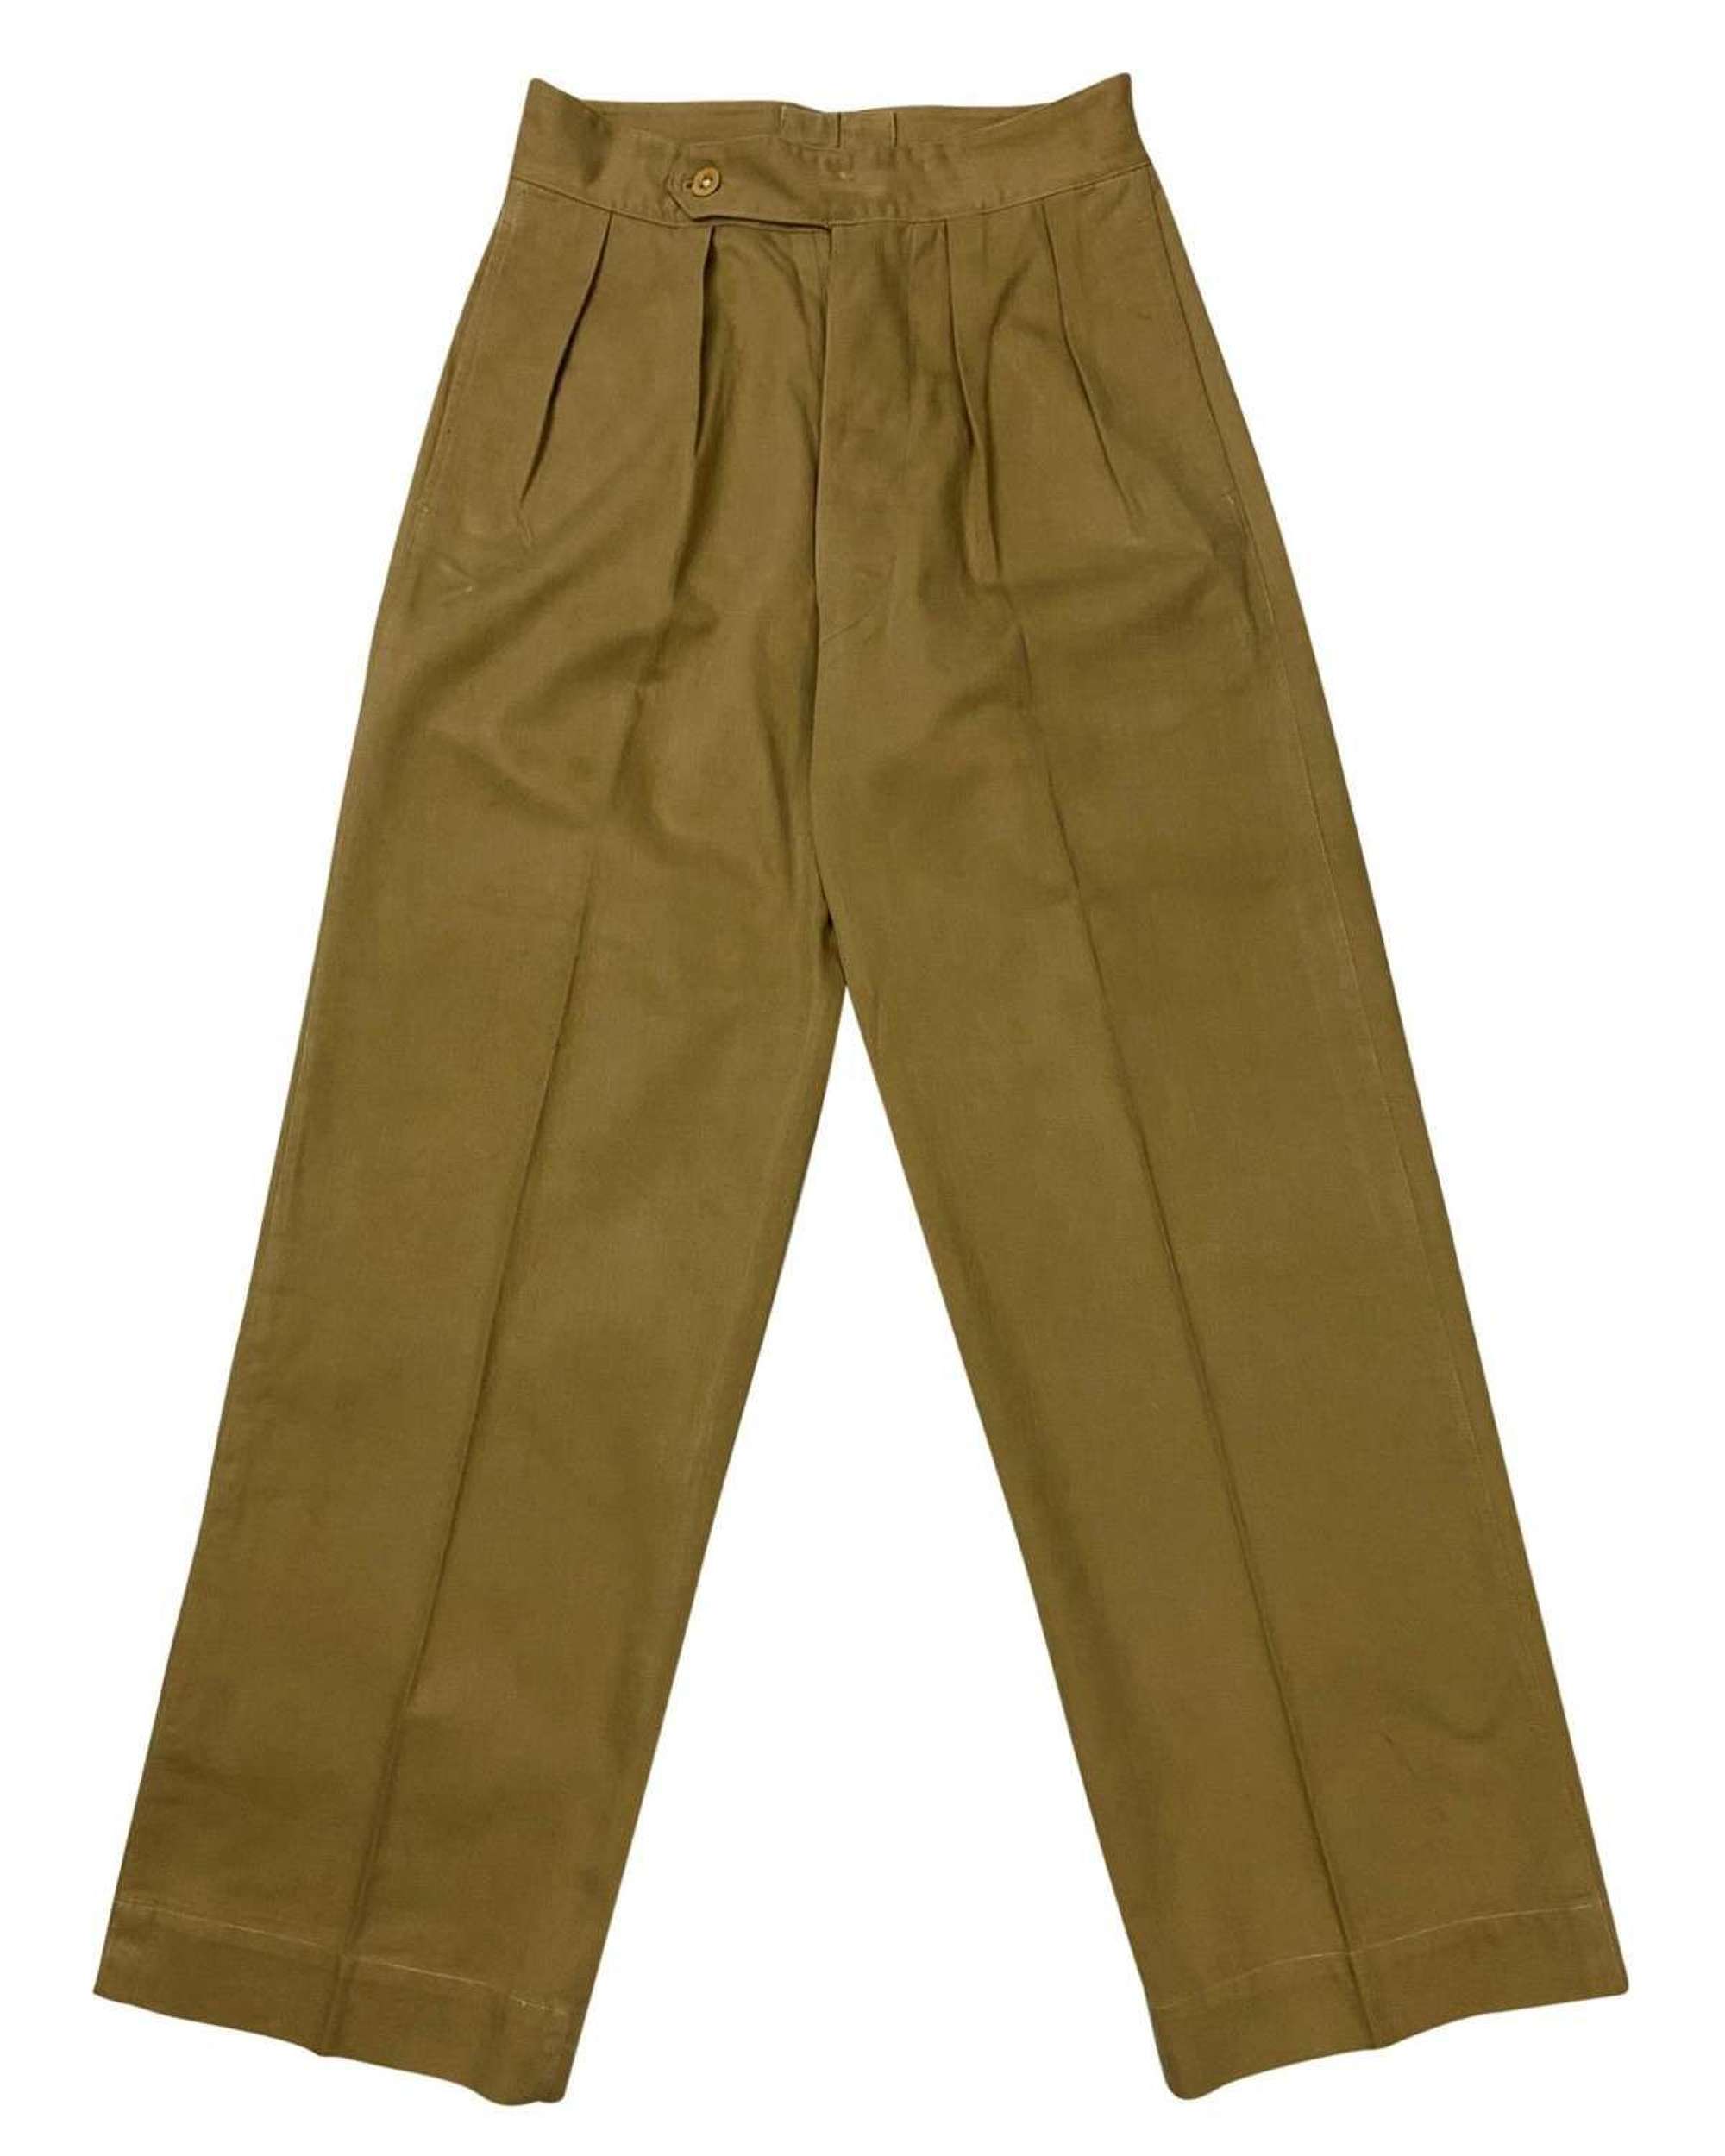 Original 1940s British Officers Khaki Drill Trousers